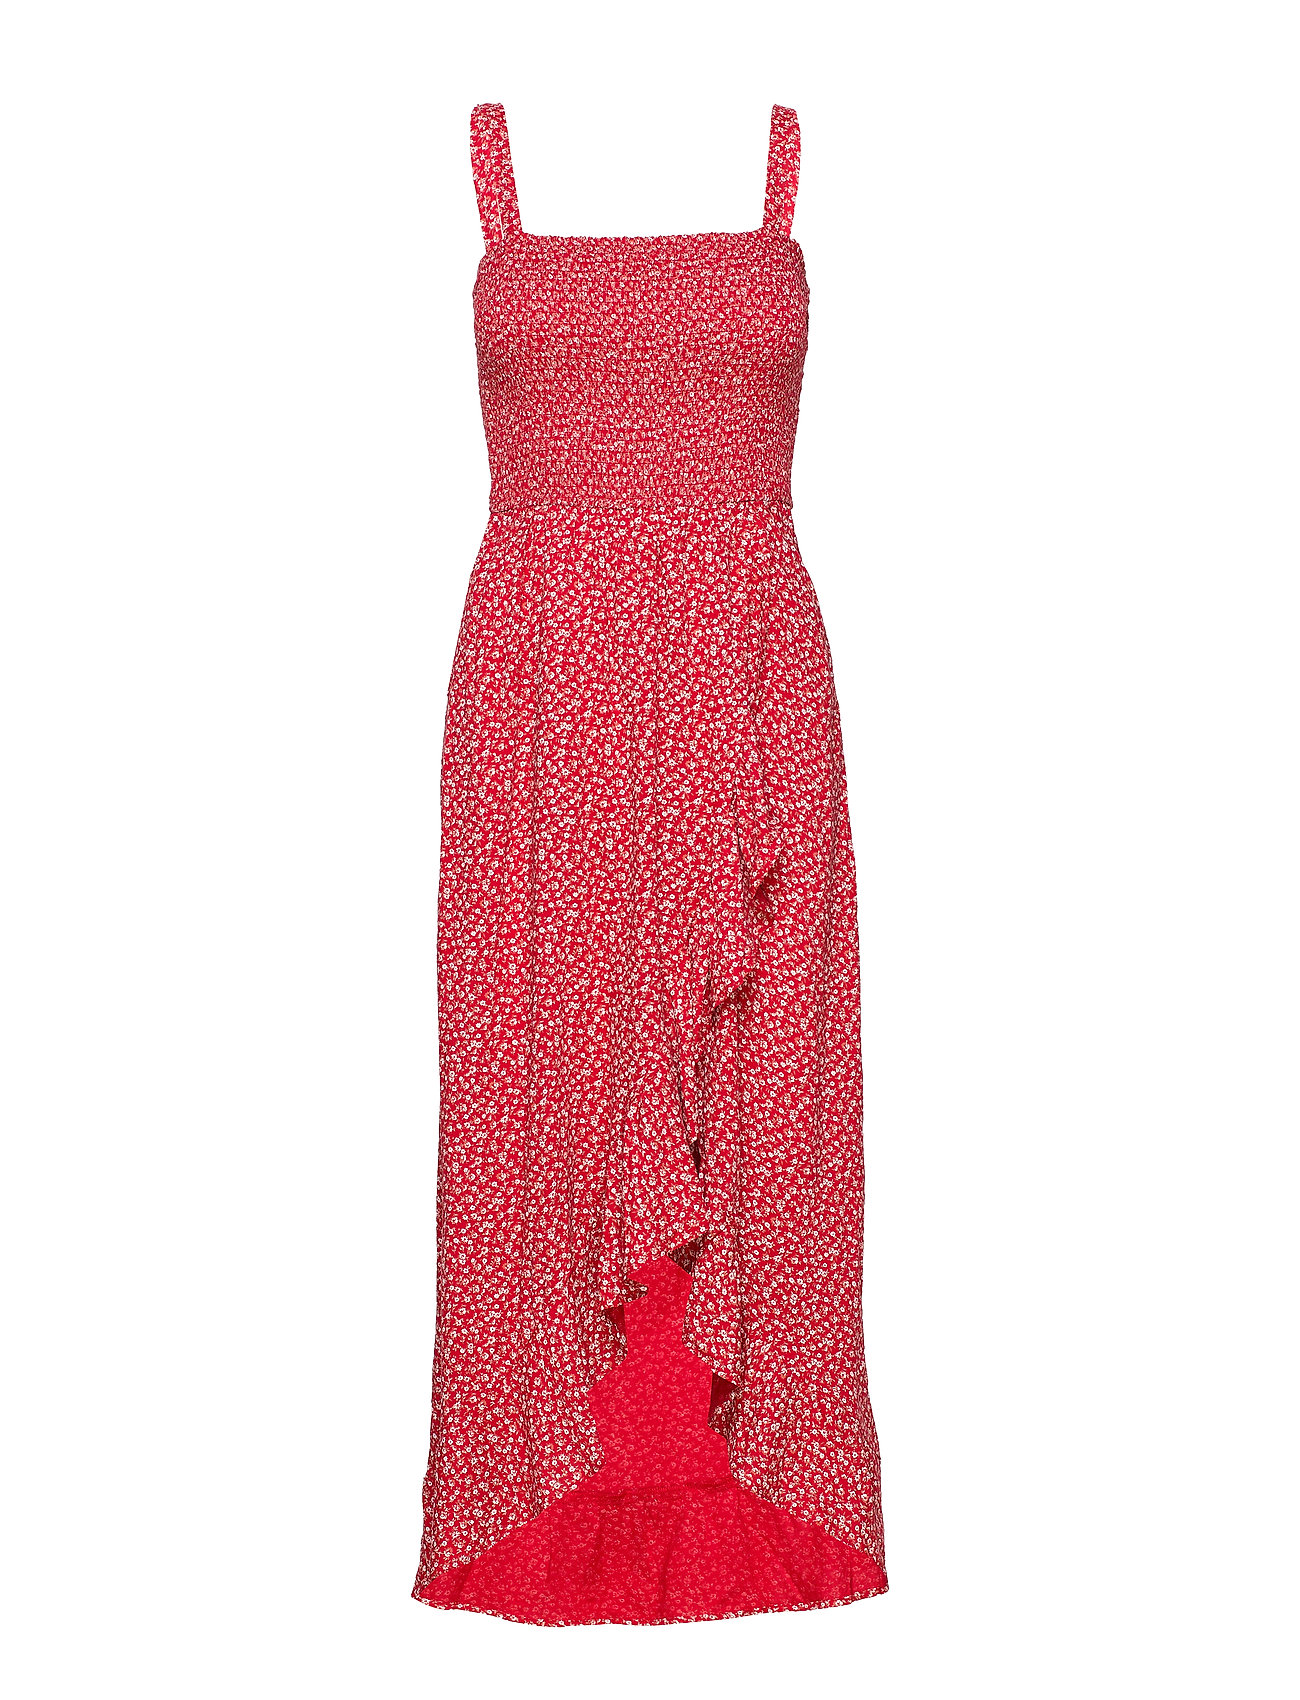 hollister red dress Online shopping has 